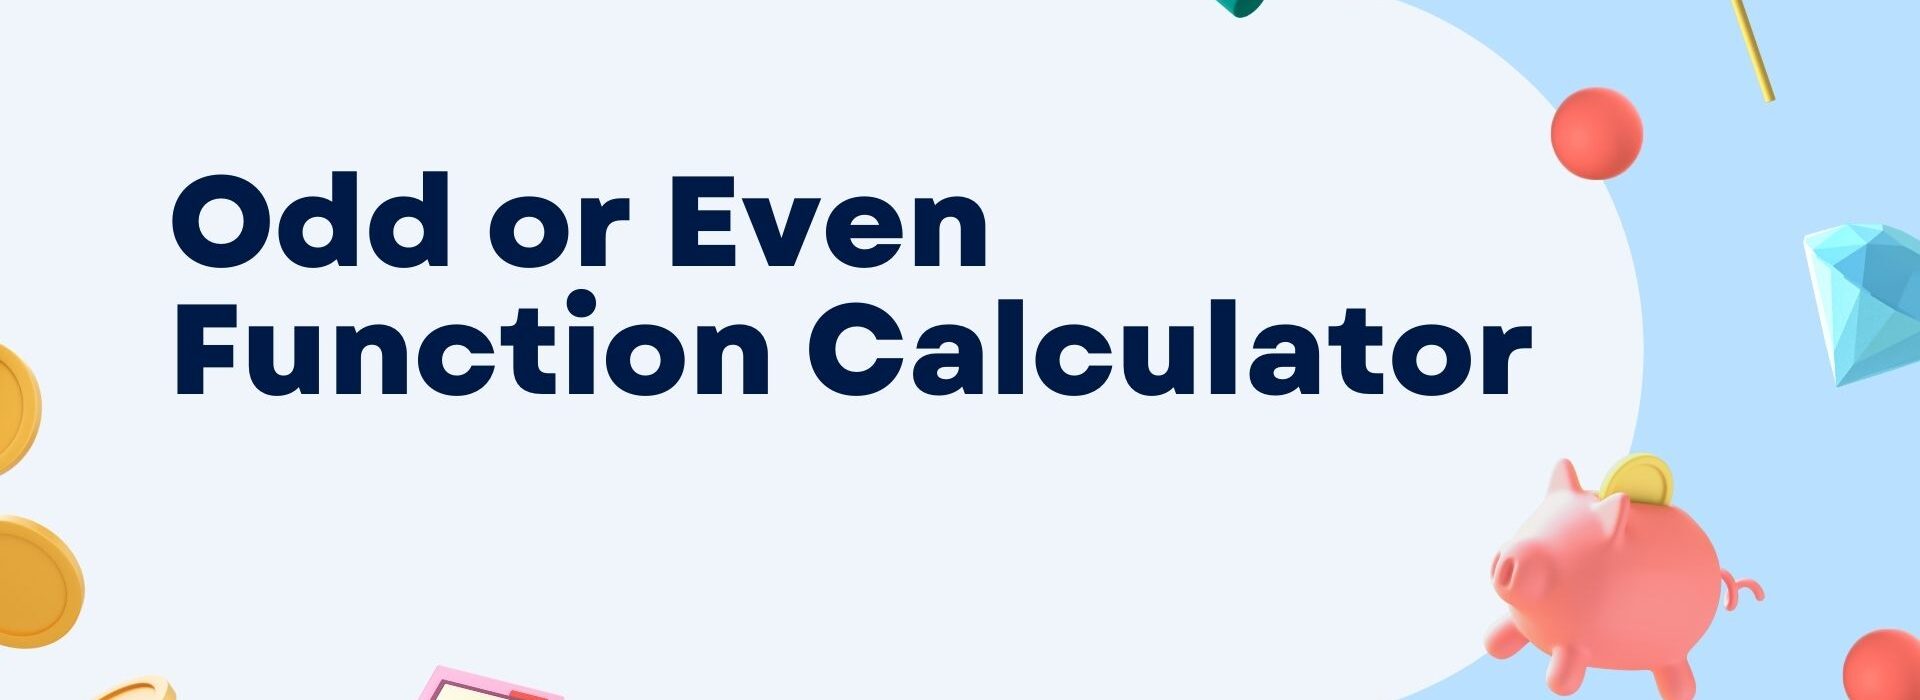 Odd or Even Function Calculator